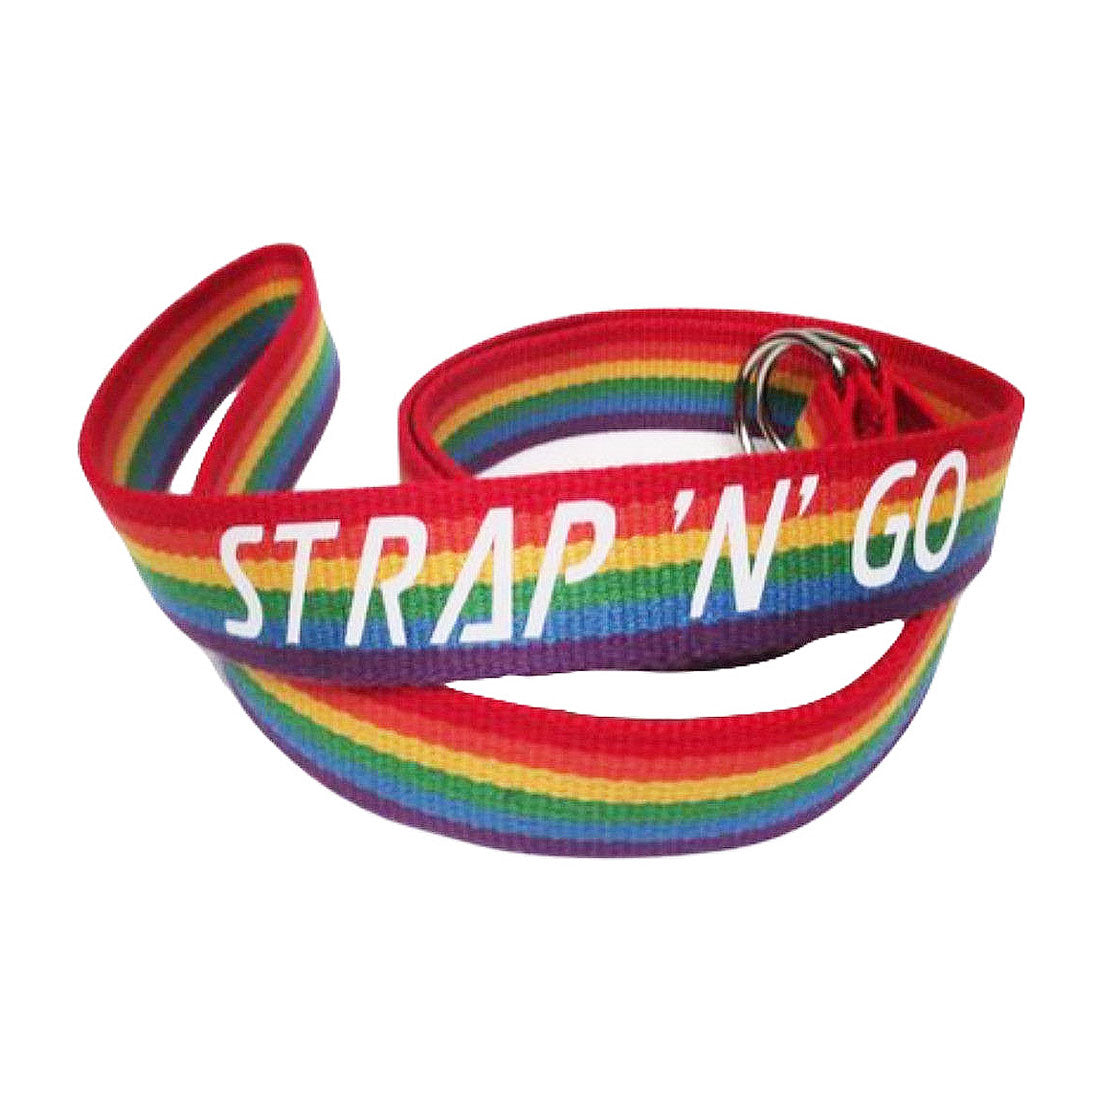 Strap N Go Skate Noose/Leash - Patterns Rainbow 6 Roller Skate Accessories